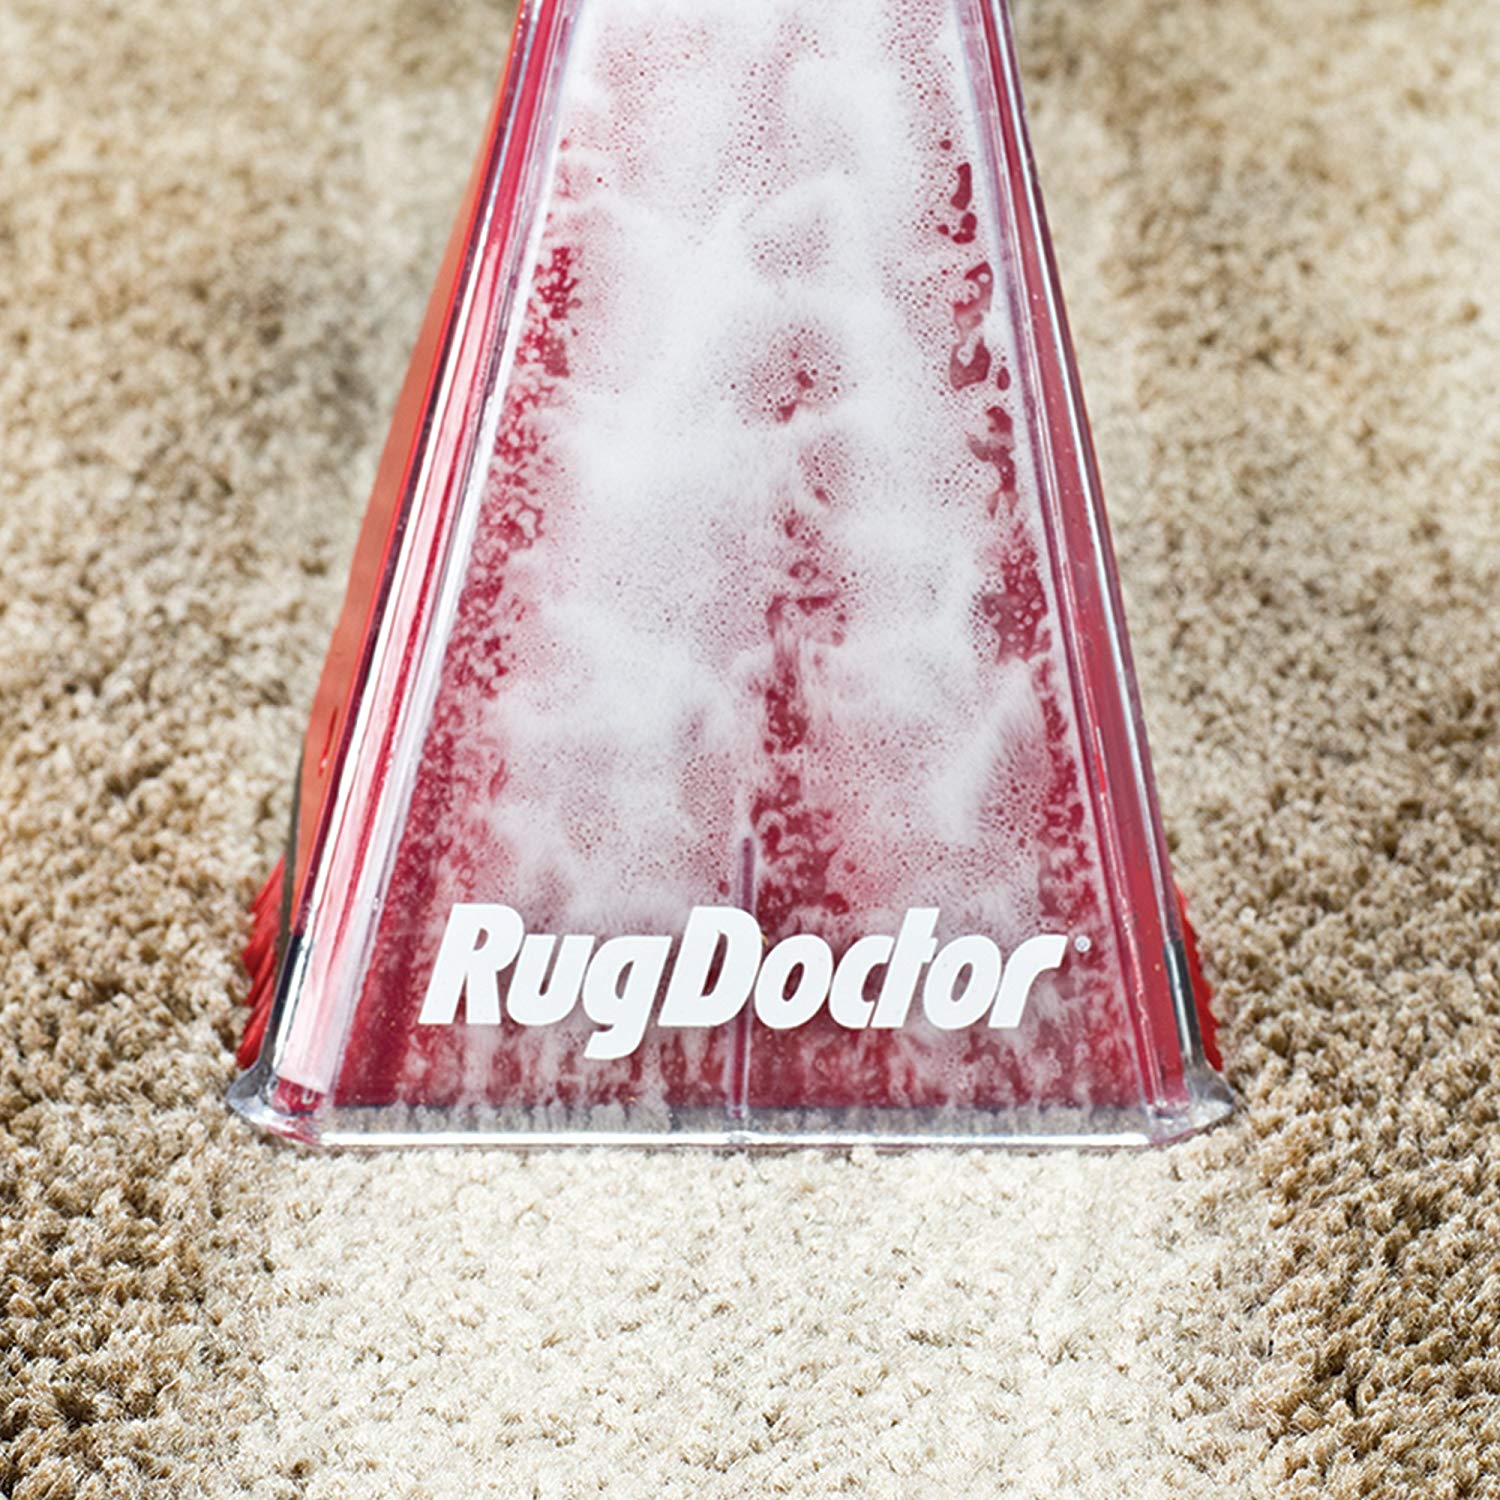 RugDoctor-Portable-Spot-Carpet-Cleaner-Stain-Remover